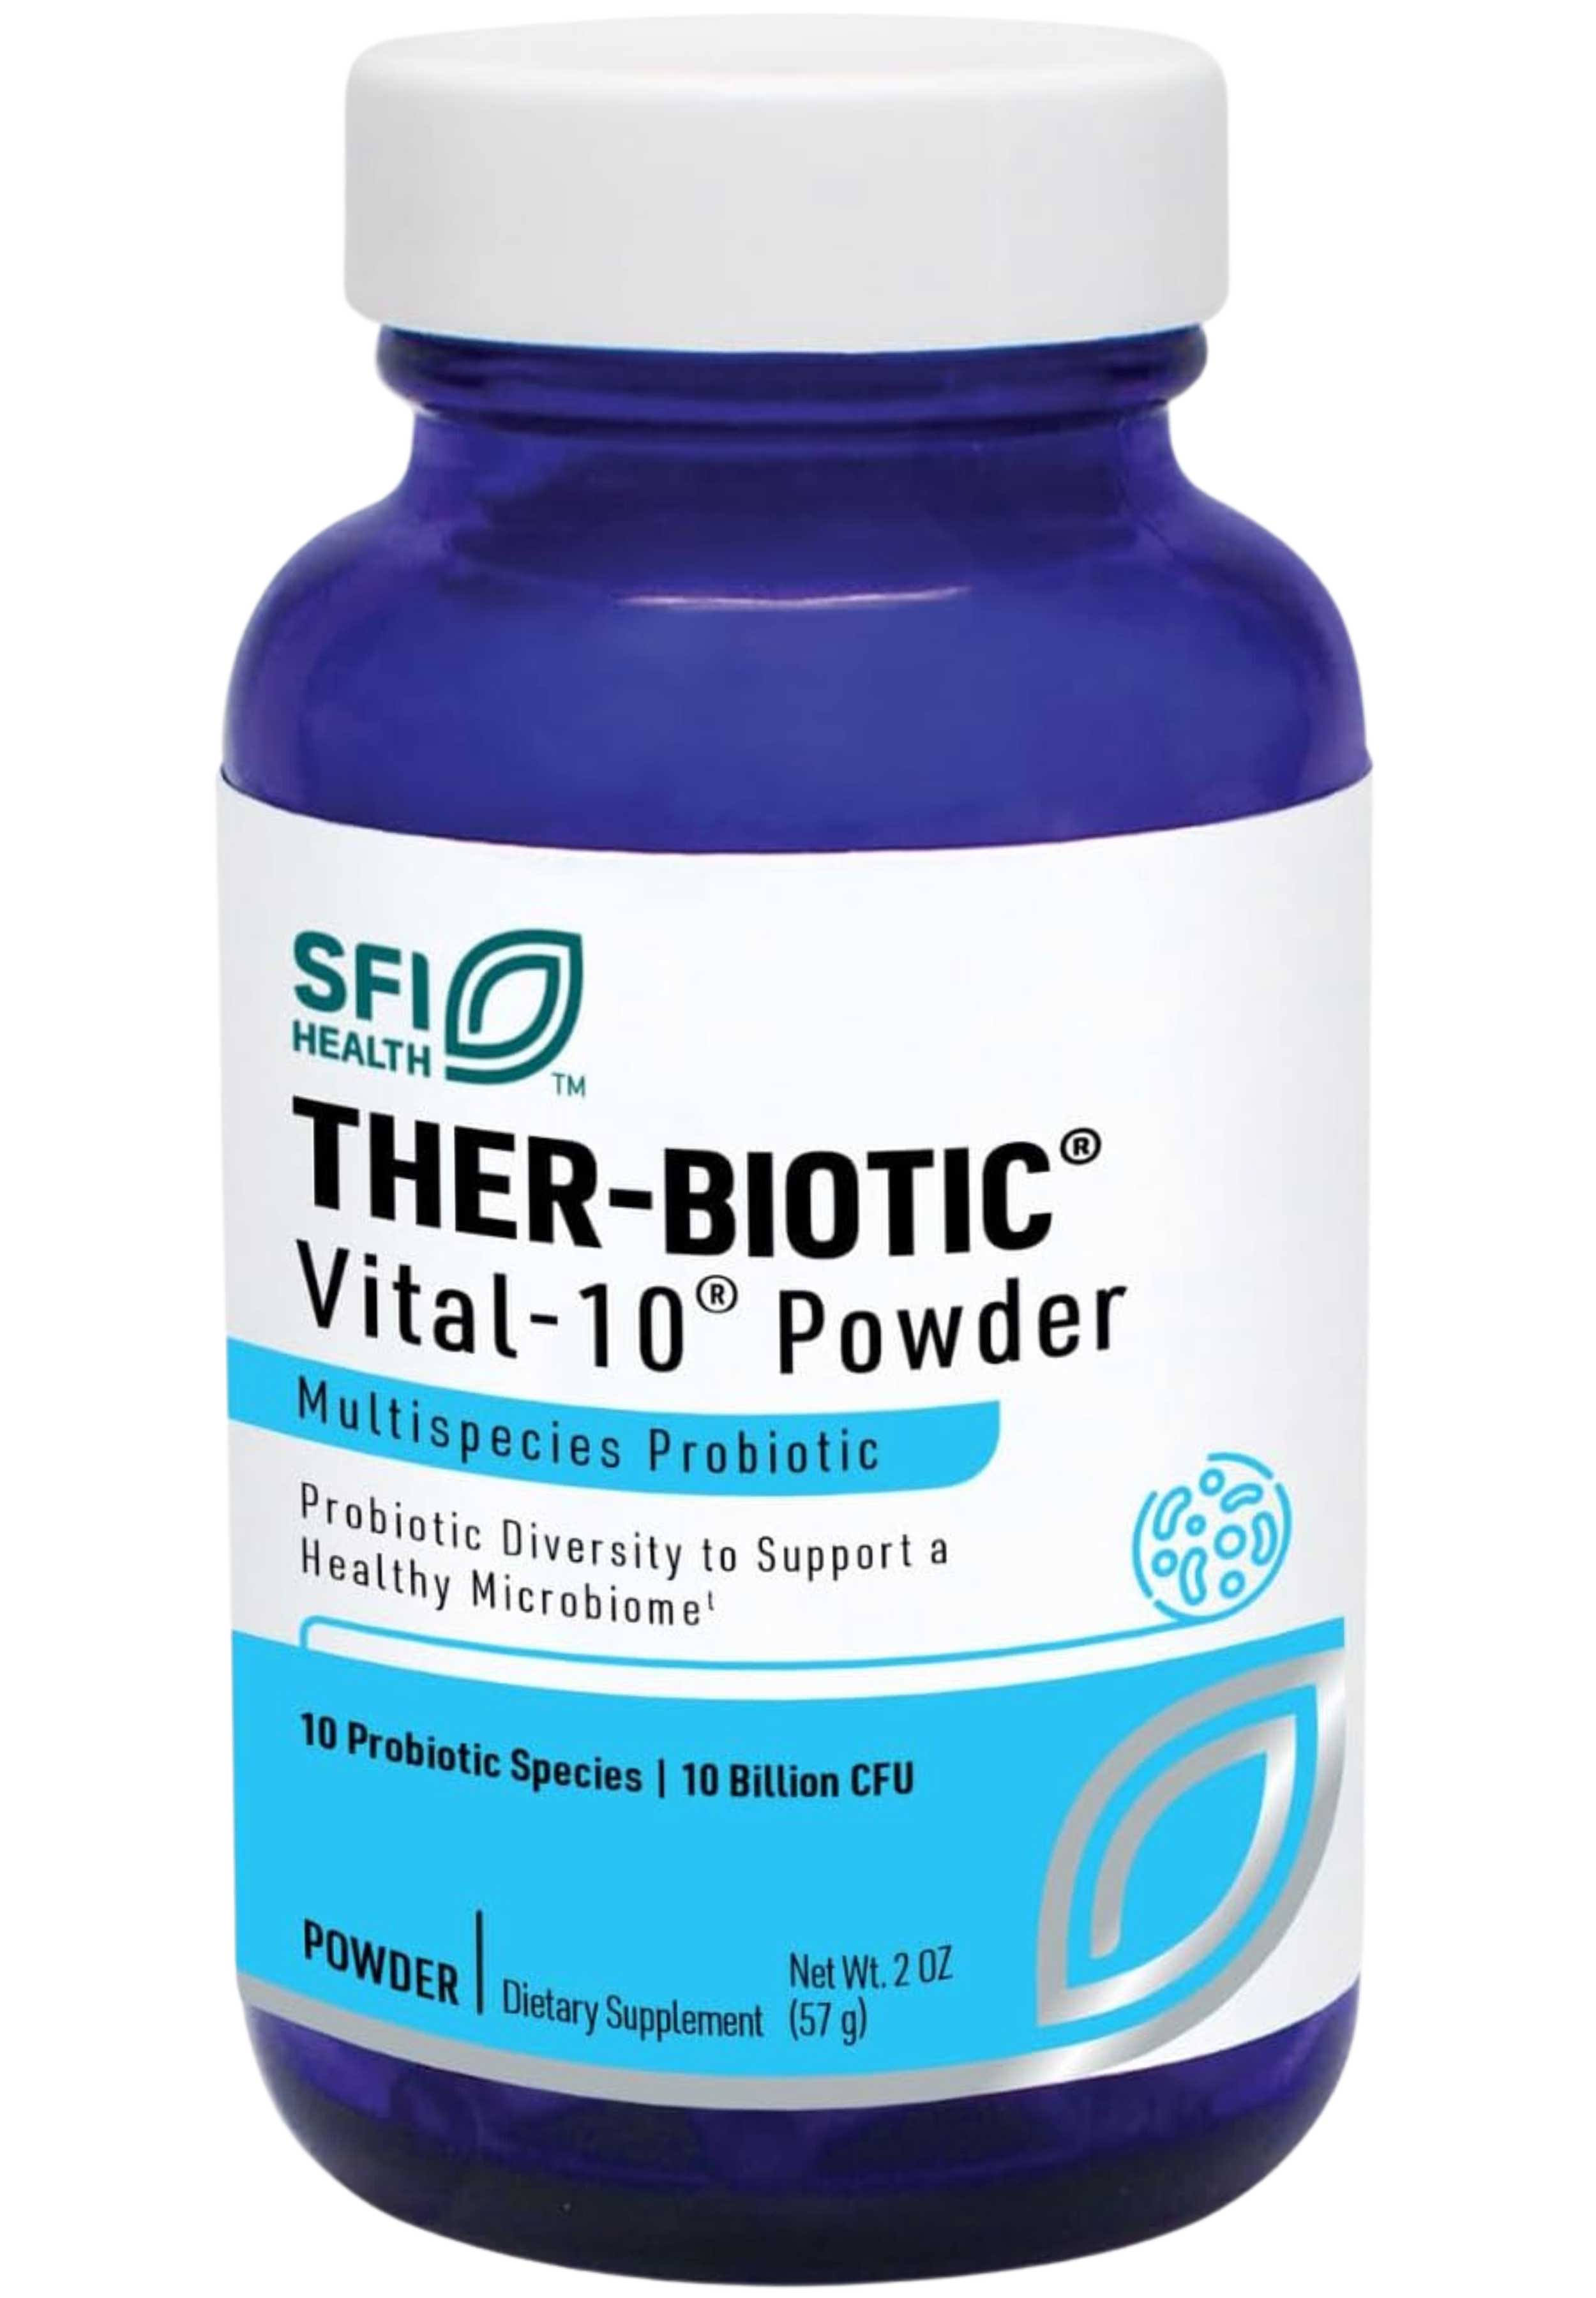 Klaire Labs Ther-Biotic Vital-10 Powder